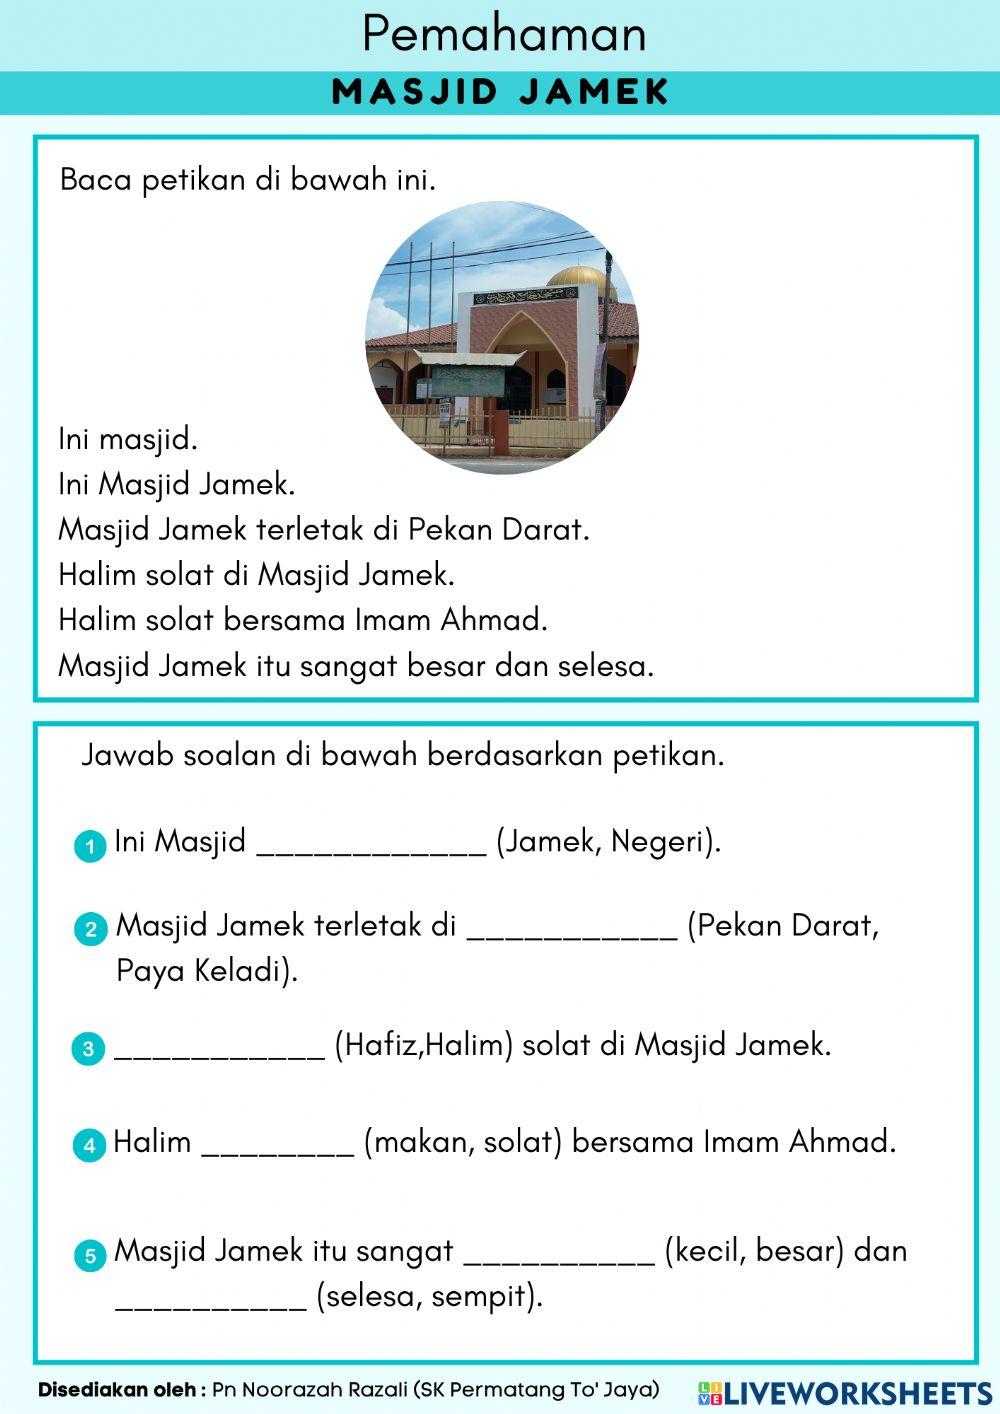 Pemulihan : Masjid Jamek